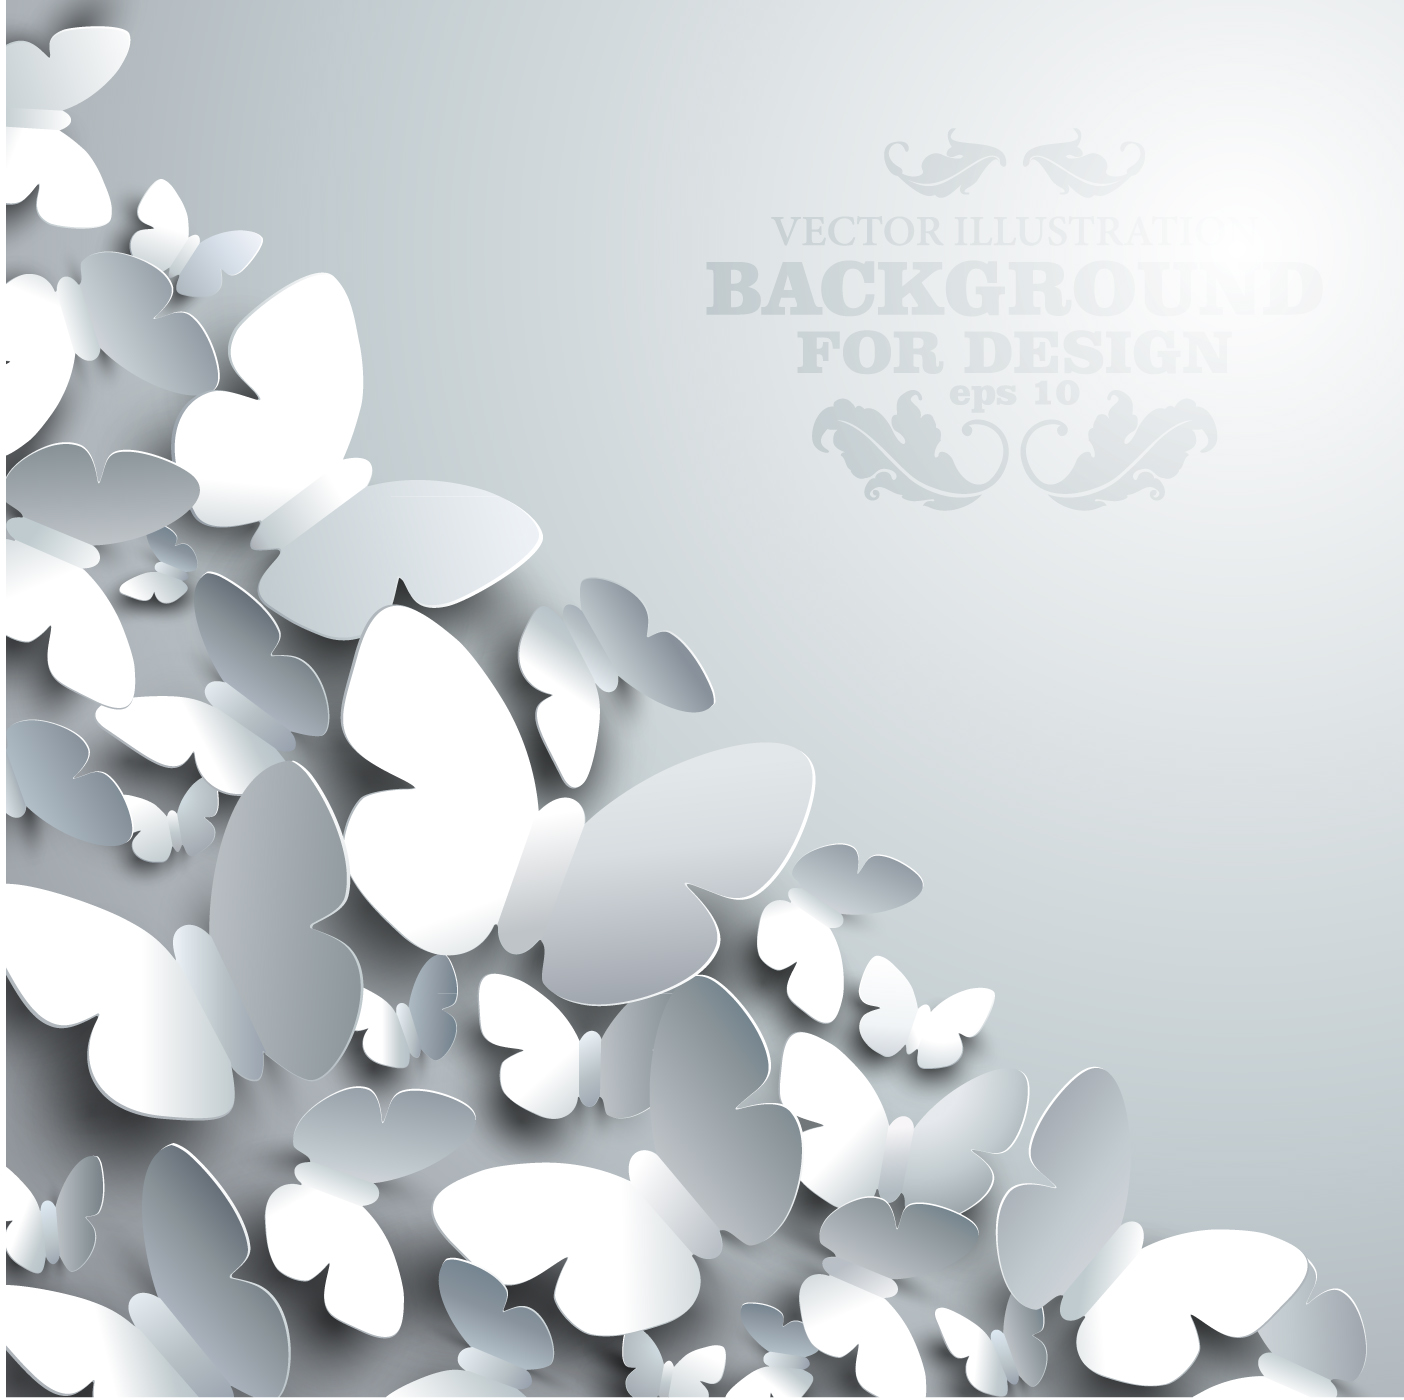 Paper butterflies vector backgrounds 05